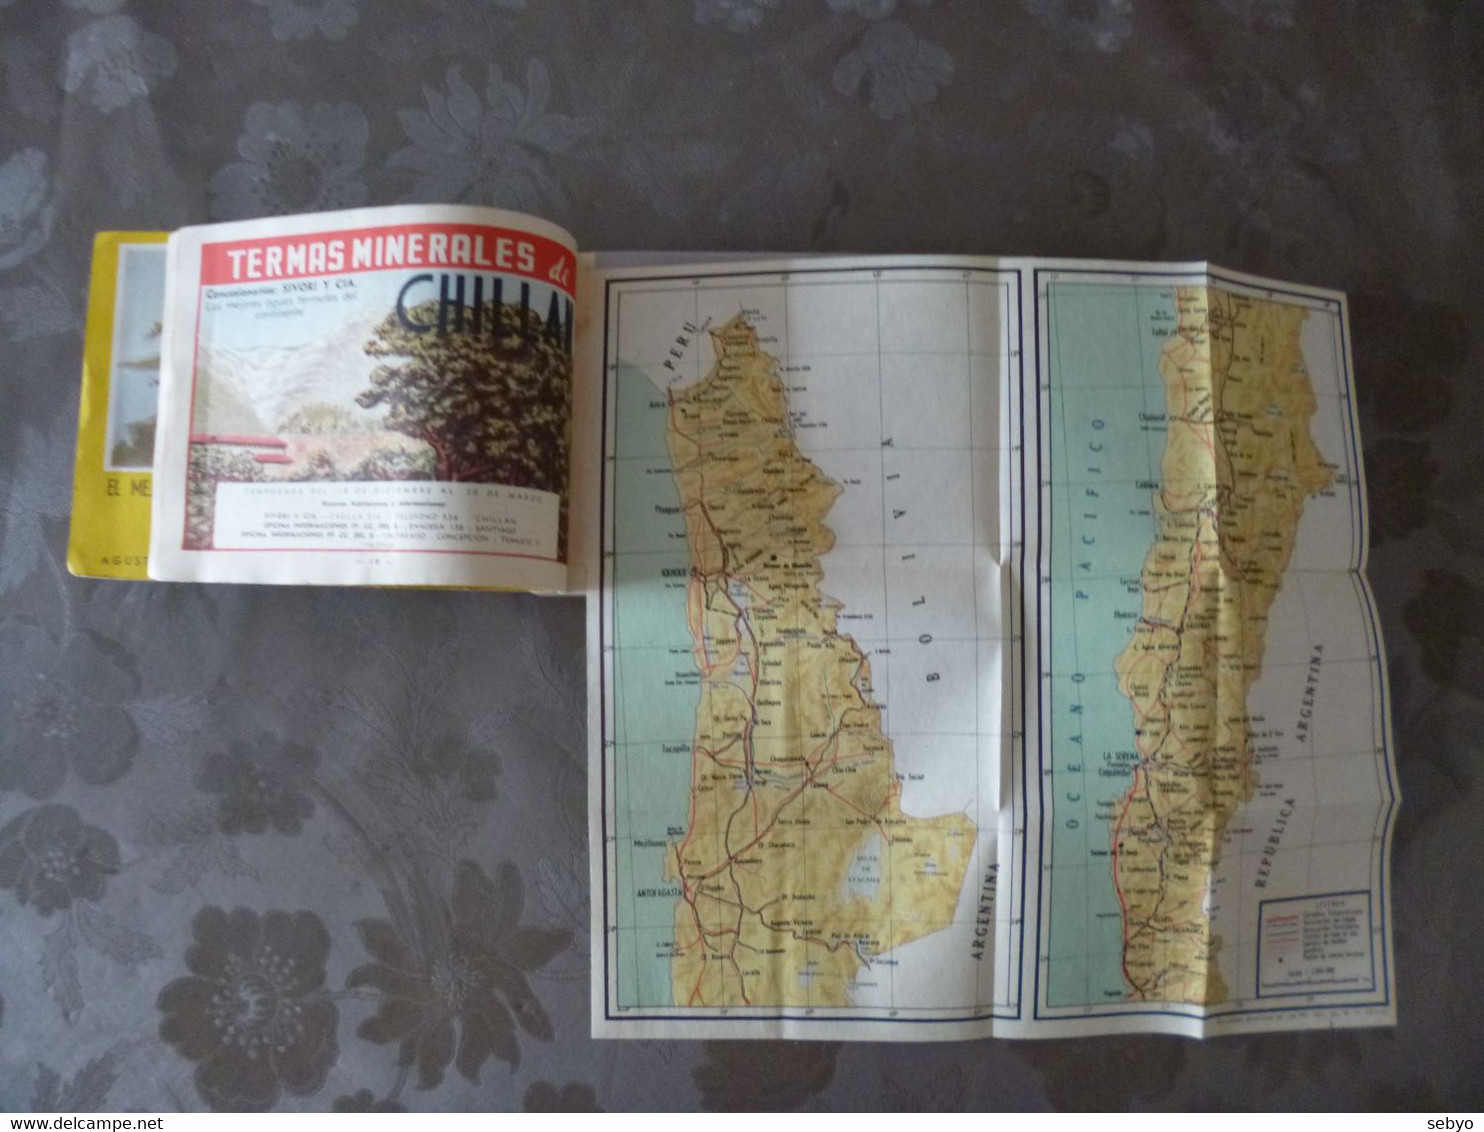 CHILI: Guide 1955. Guia Del Veraneante 1955. - Géographie & Voyages